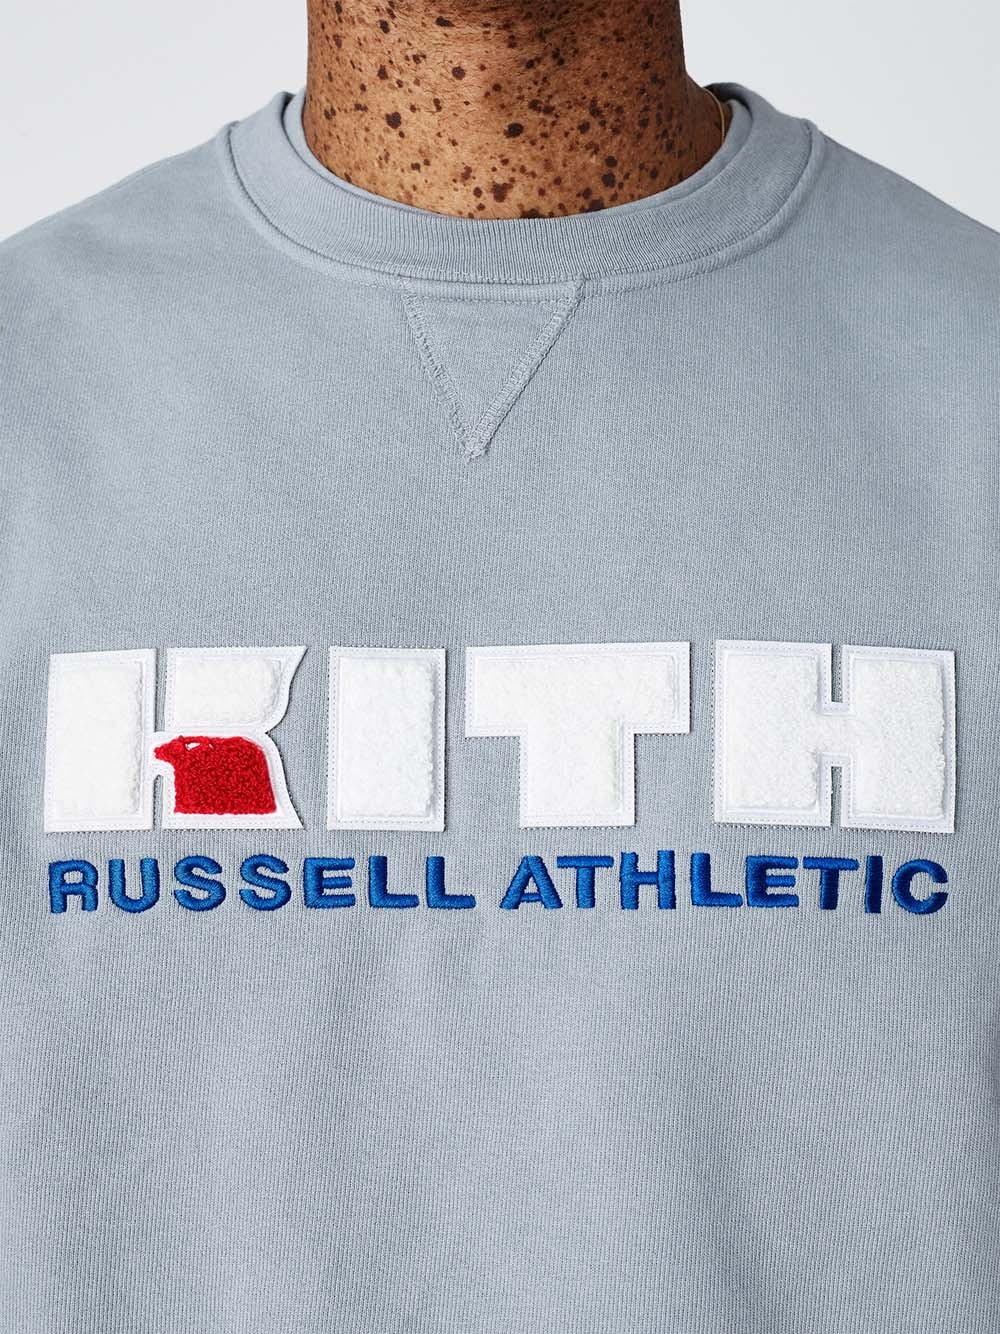 KITH x Russell Athletic 2019 春夏聯名系列 Lookbook 完整公佈